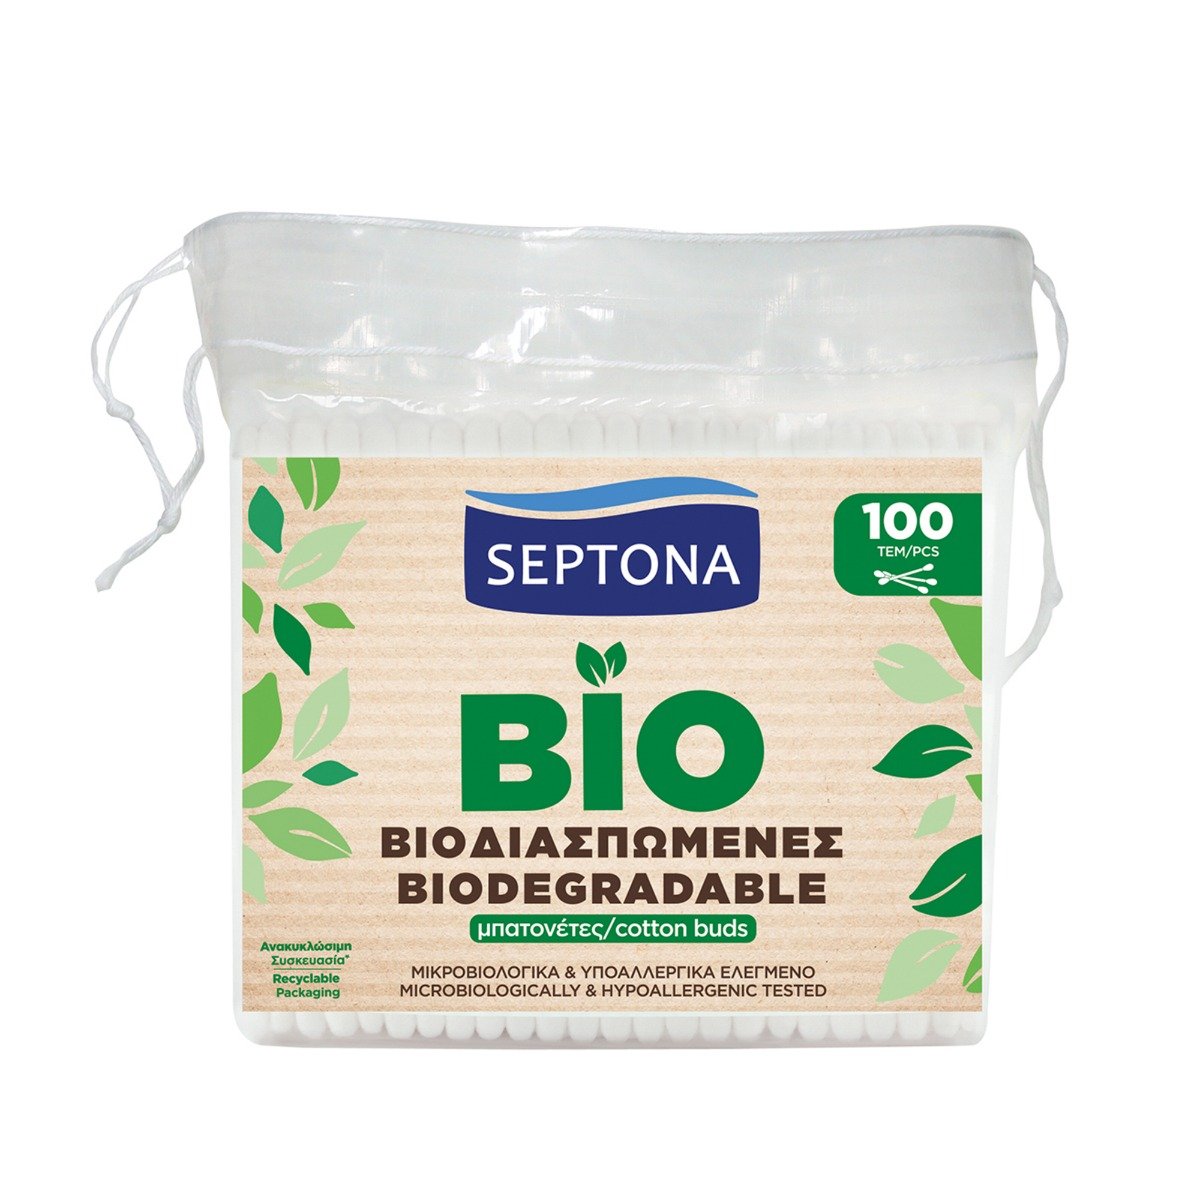 Septona Septona EcoLife patyczki higieniczne 100 sztuk 1145113